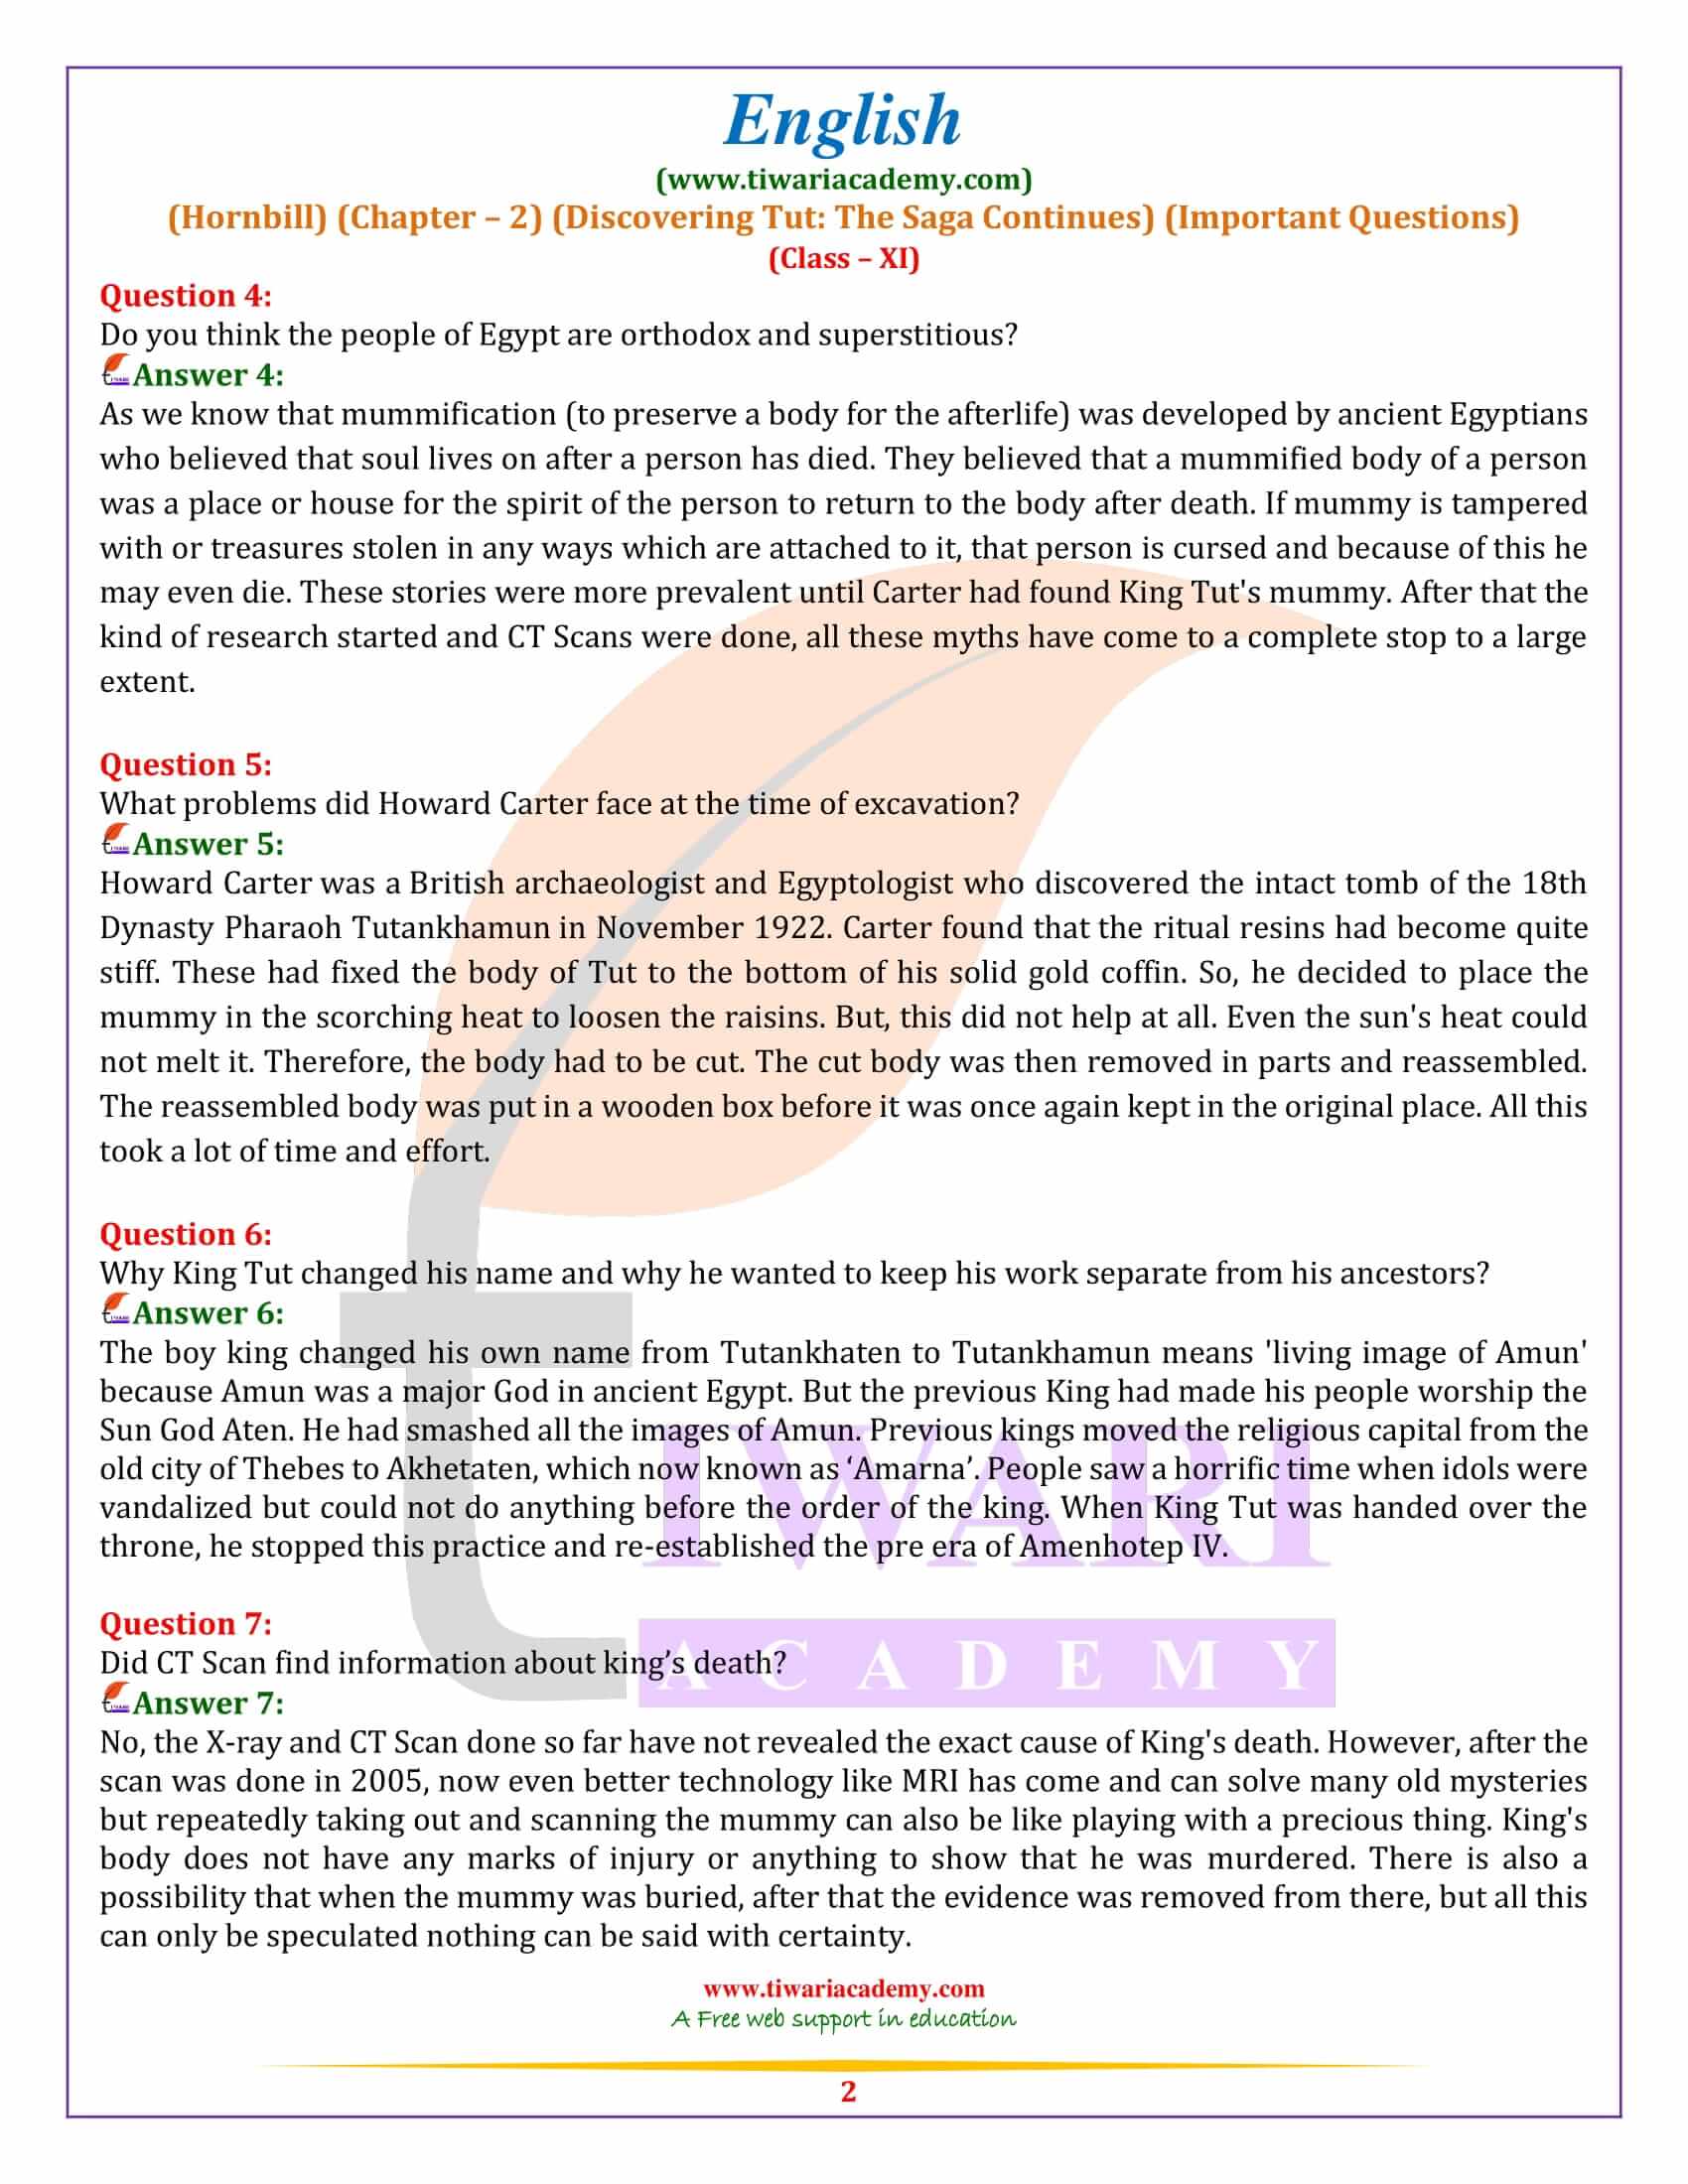 Class 11 English Hornbill Chapter 3 Practice Questions